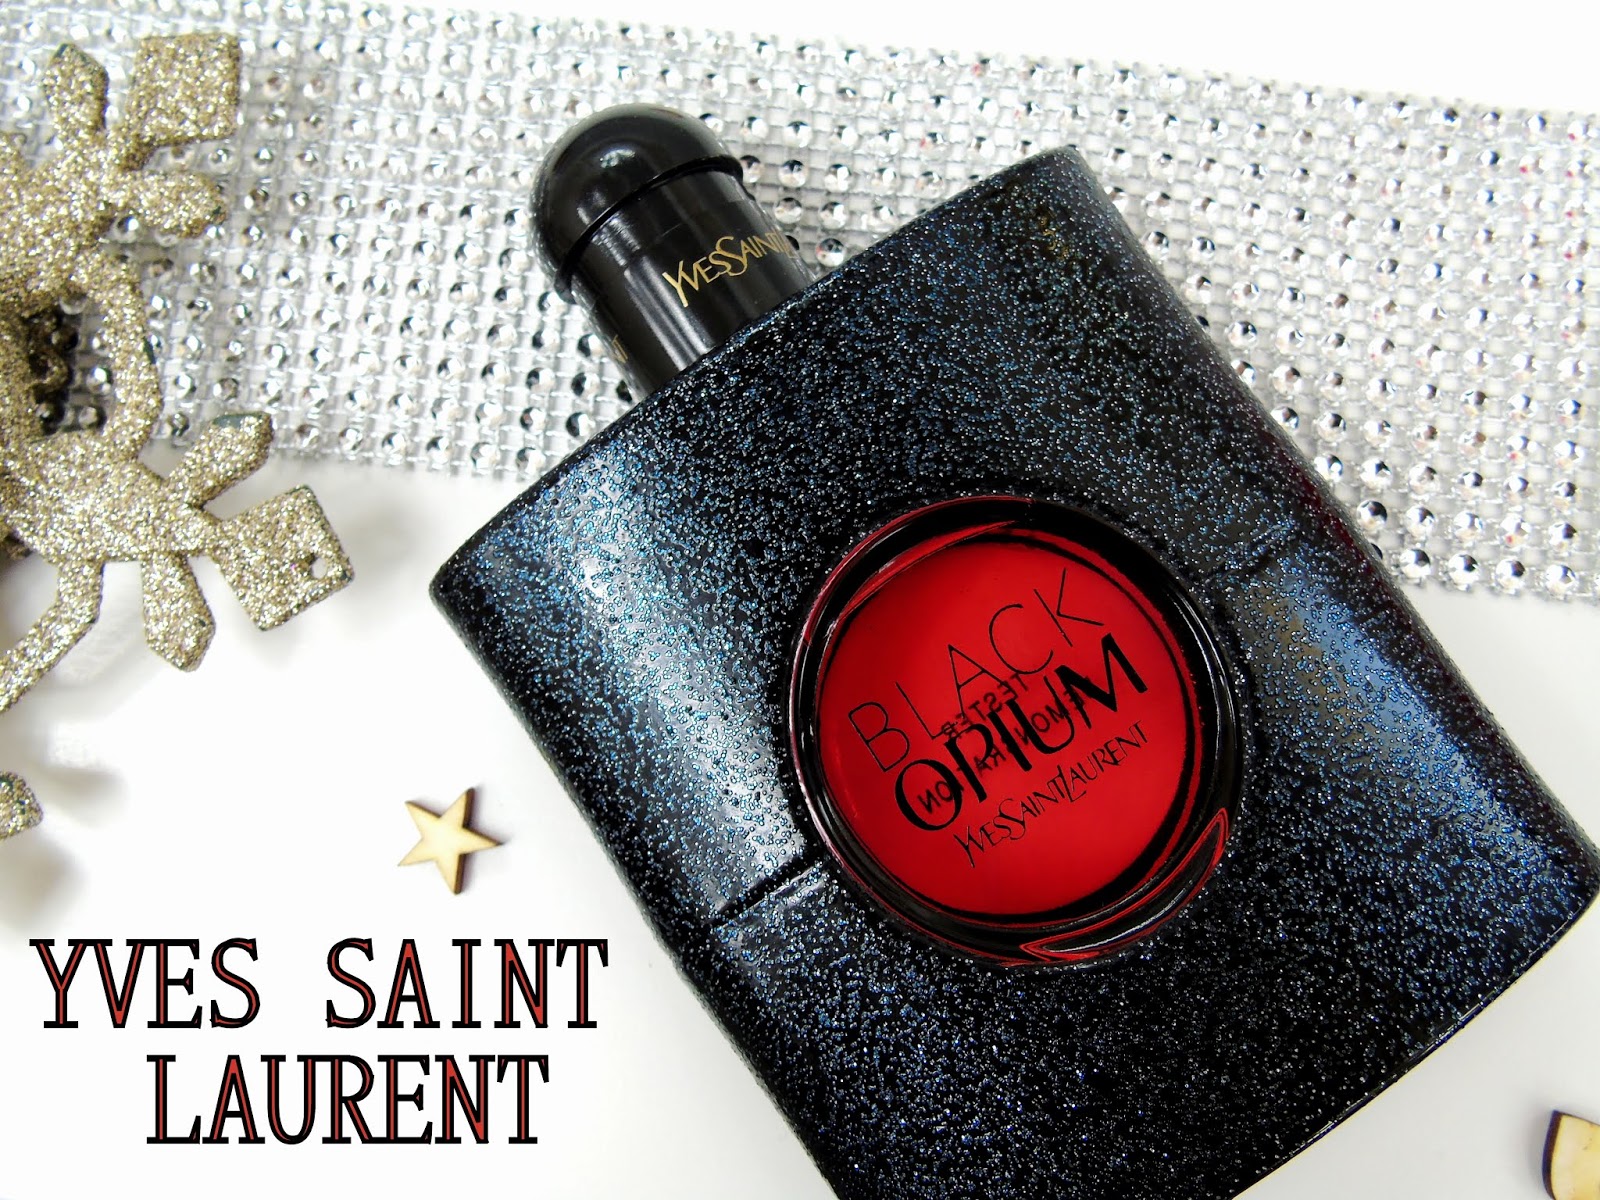 Blog testerski: Tester perfum BLACK OPIUM marki YVES SAINT LAURENT - Tańsza wersja Twojego ulubionego zapachu :)